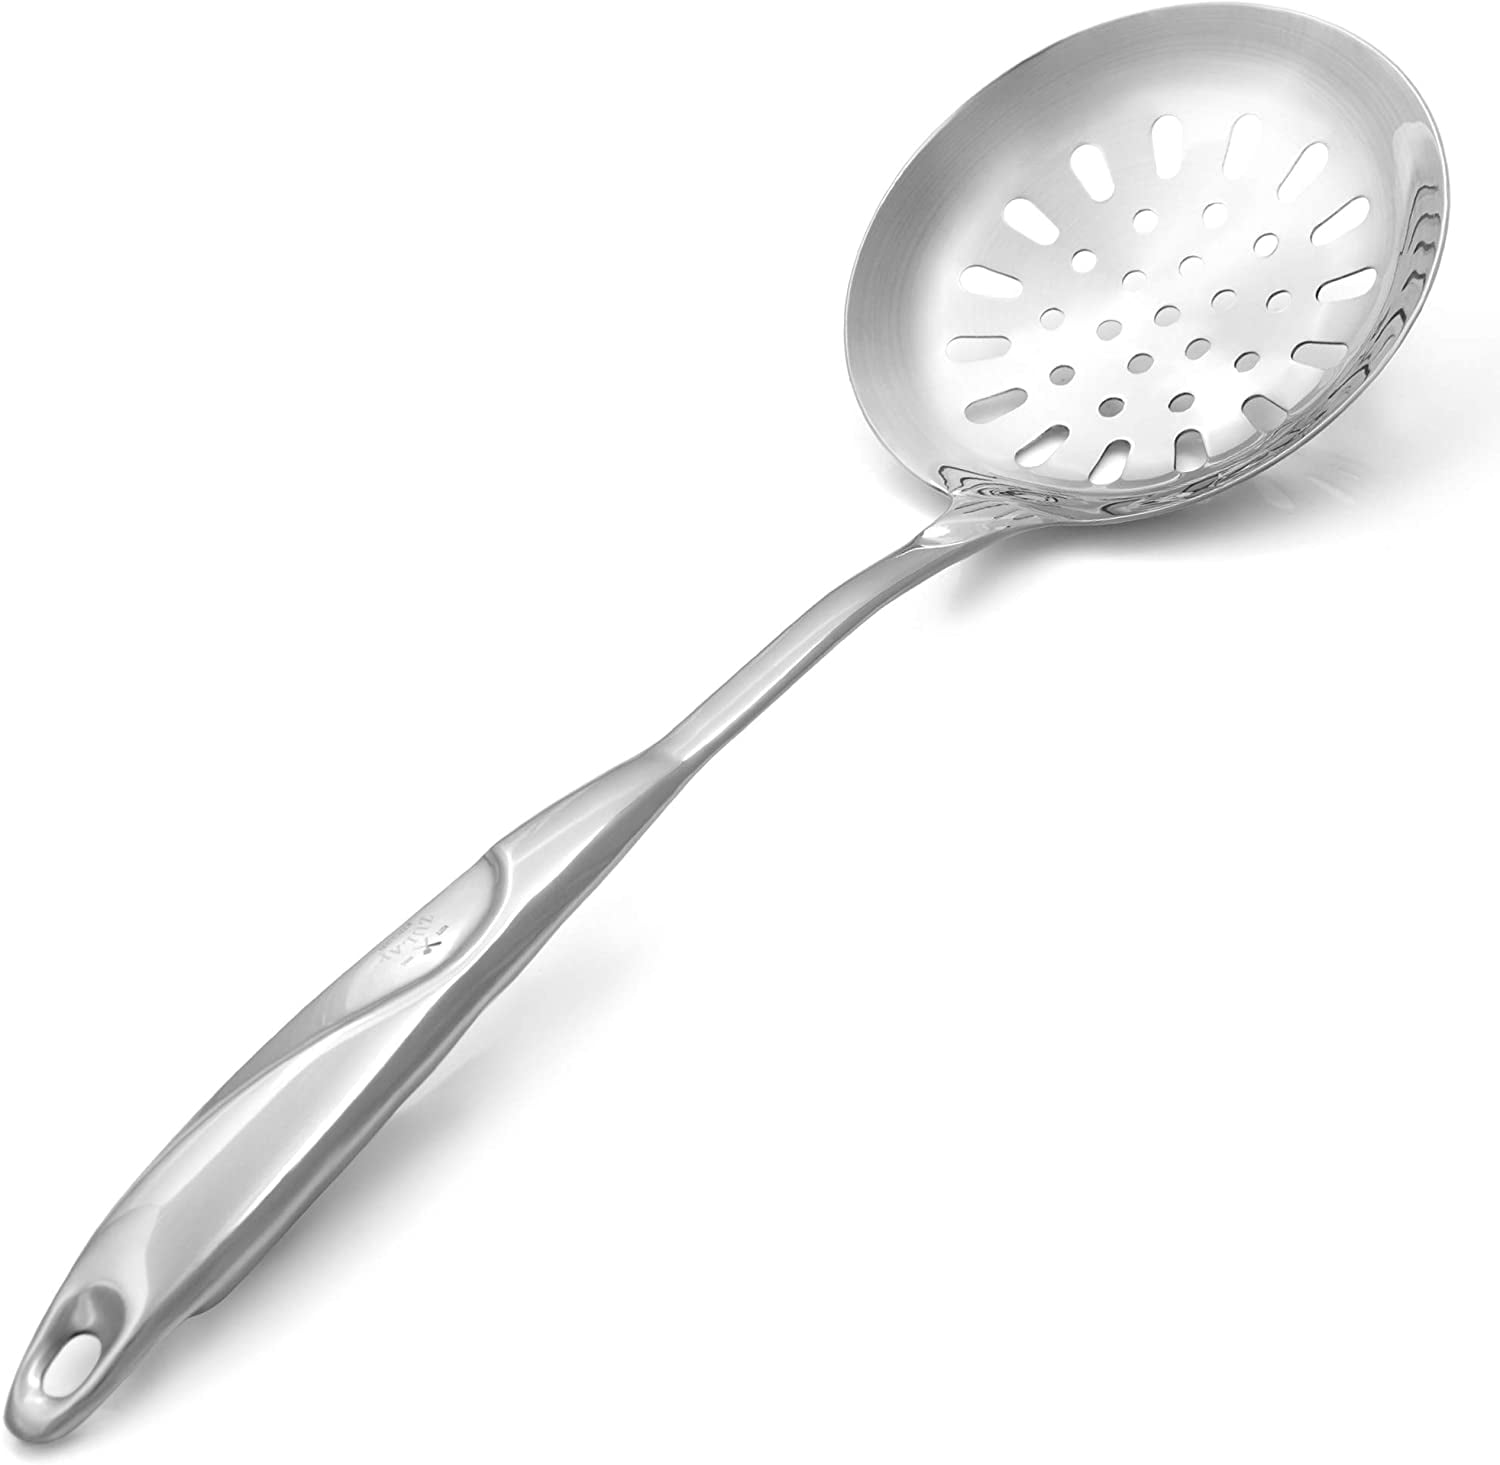 UPKOCH Stainless Steel Skimmer Slotted Spoons Colander Drain Spoon Strainer Ladle for Noodles Dumplings Hot Pot Size S 